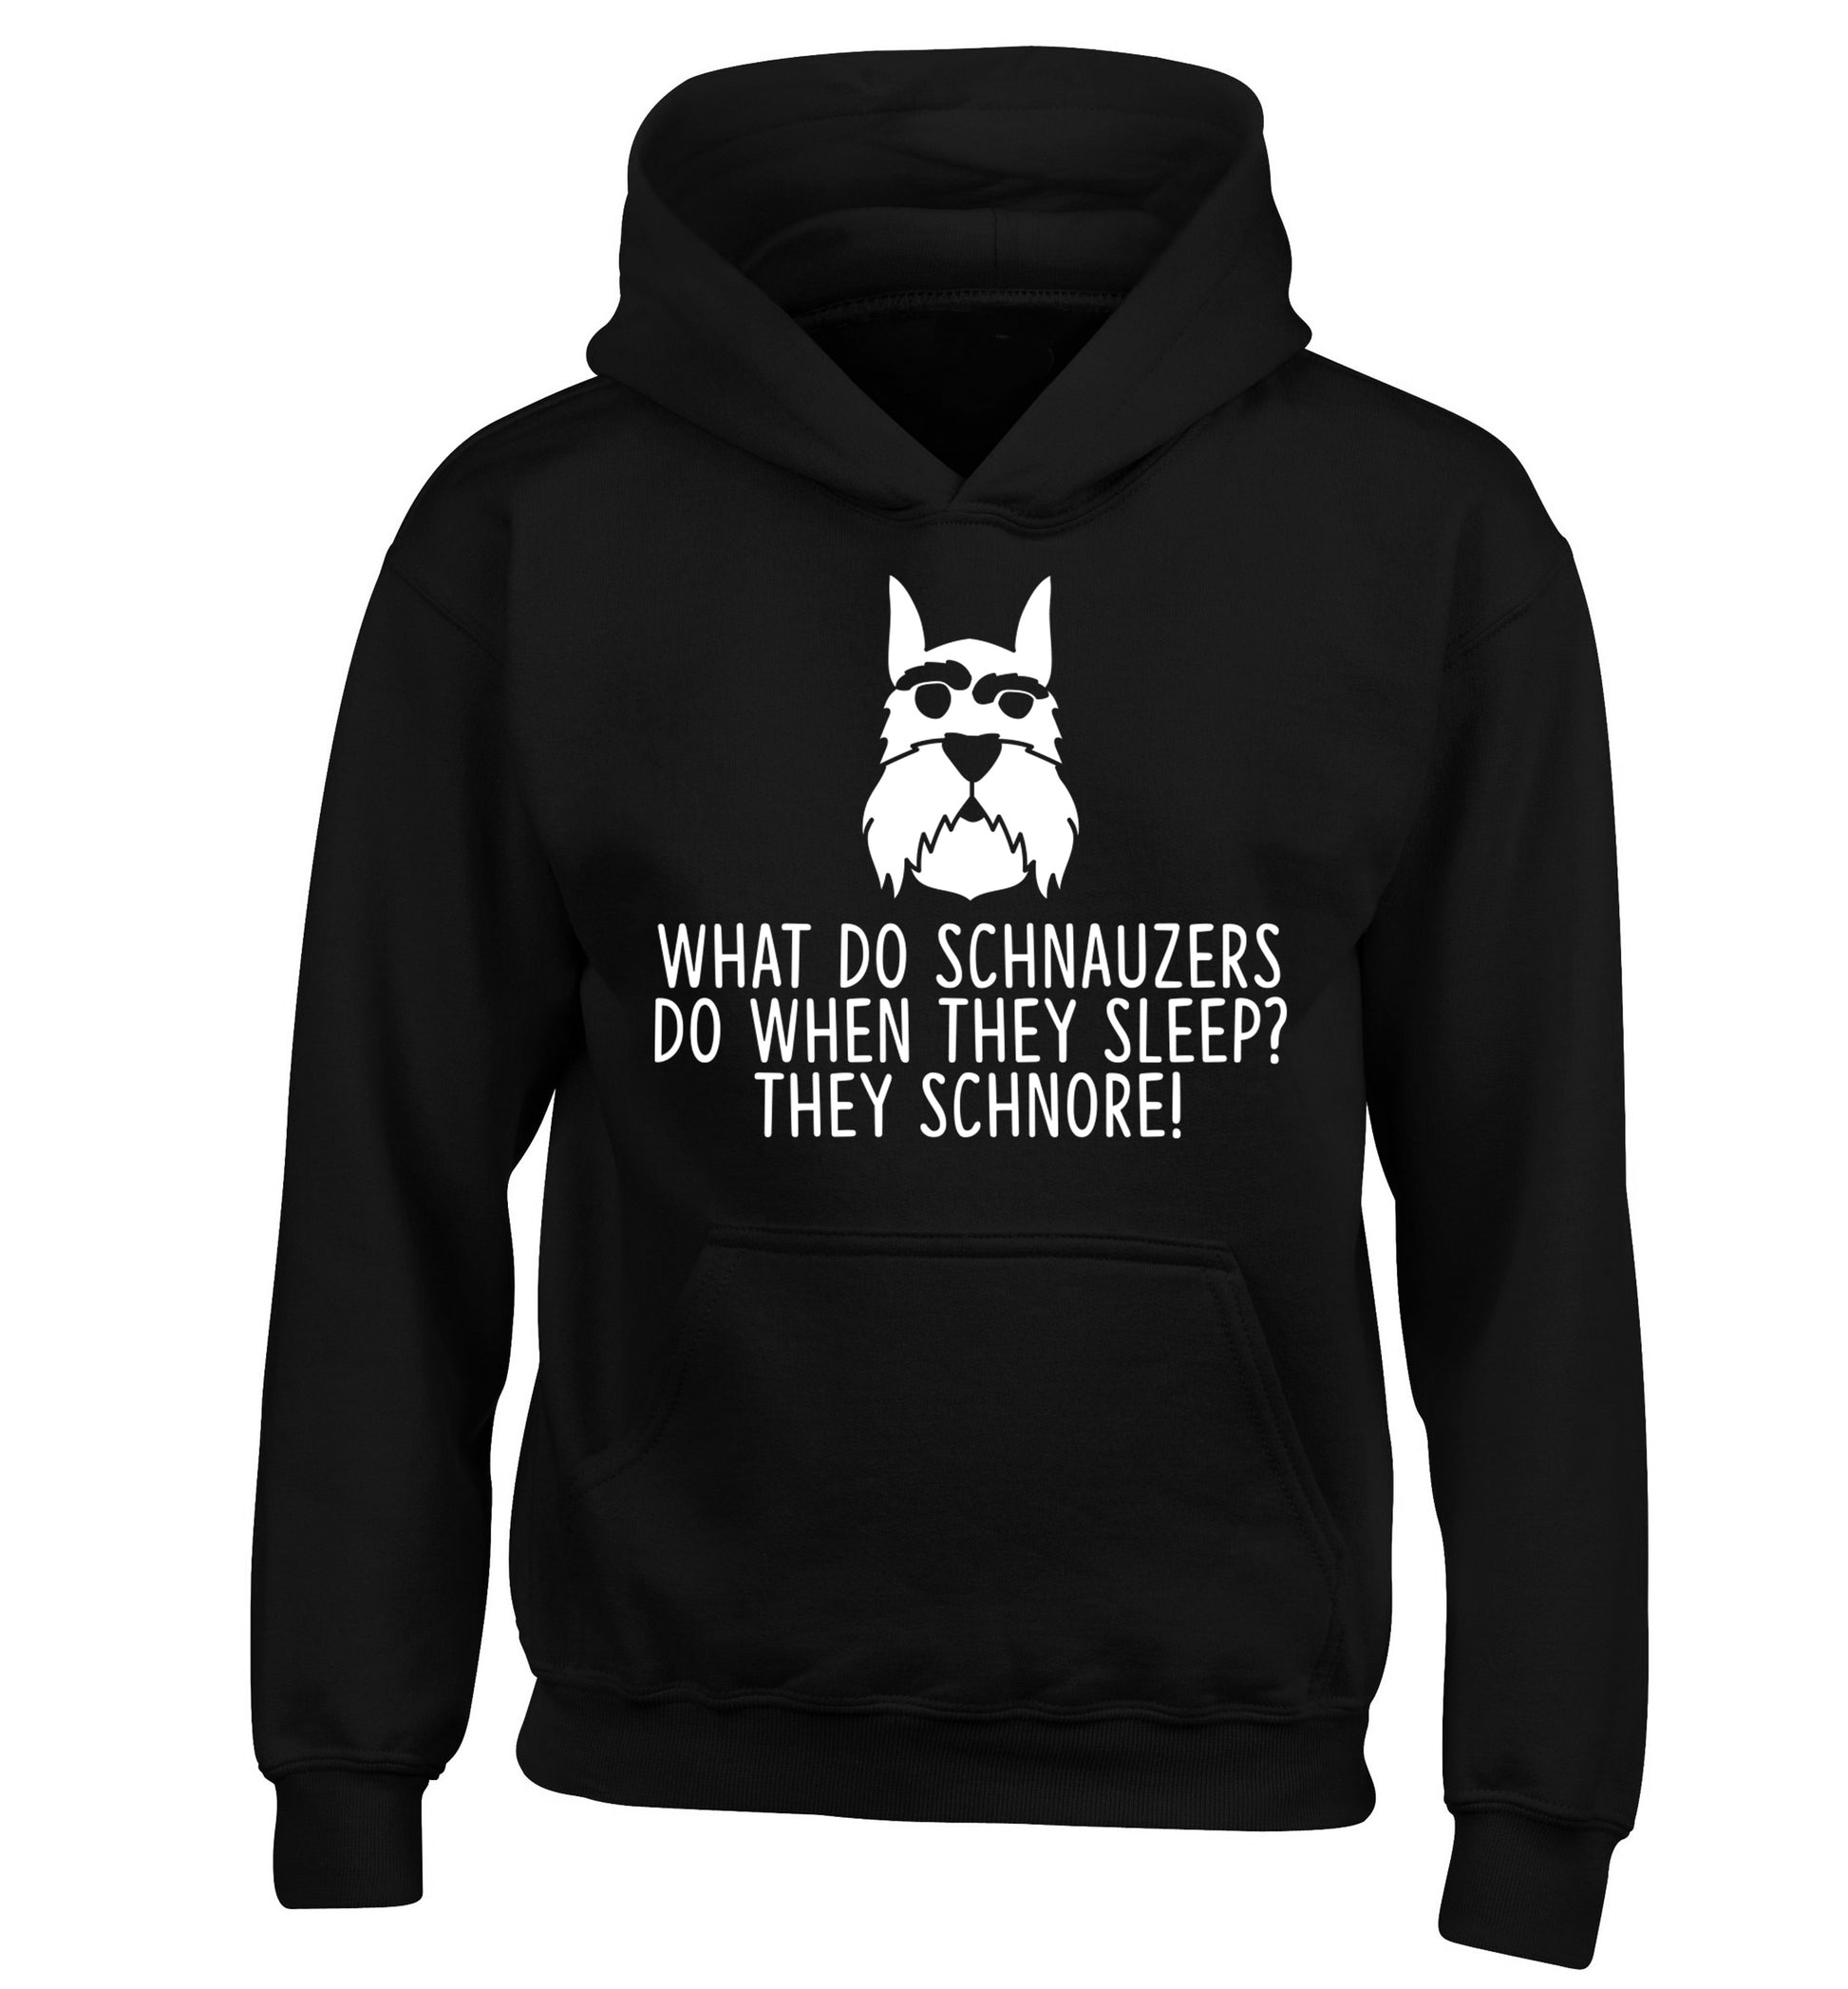 What do schnauzers do when they sleep? Schnore! children's black hoodie 12-13 Years